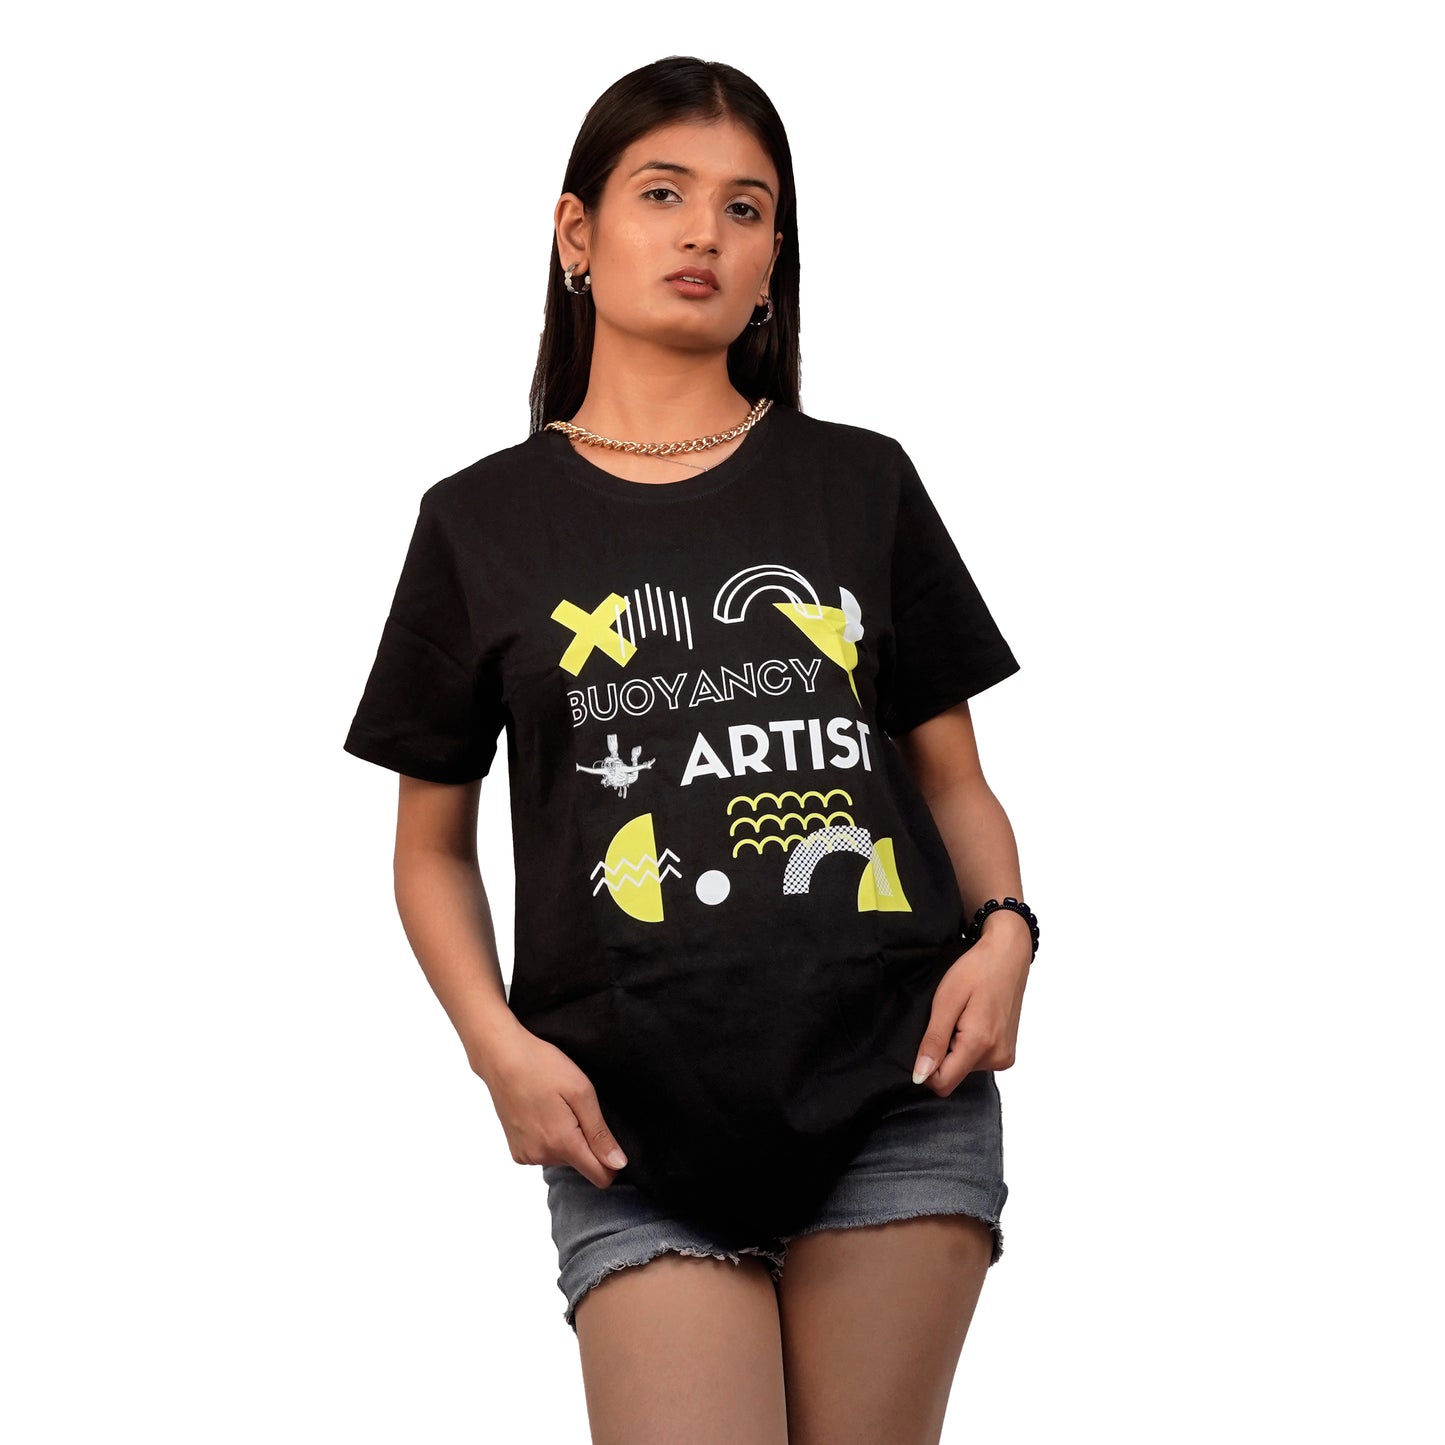 Buoyancy Artists T-shirt In Black Color For Women